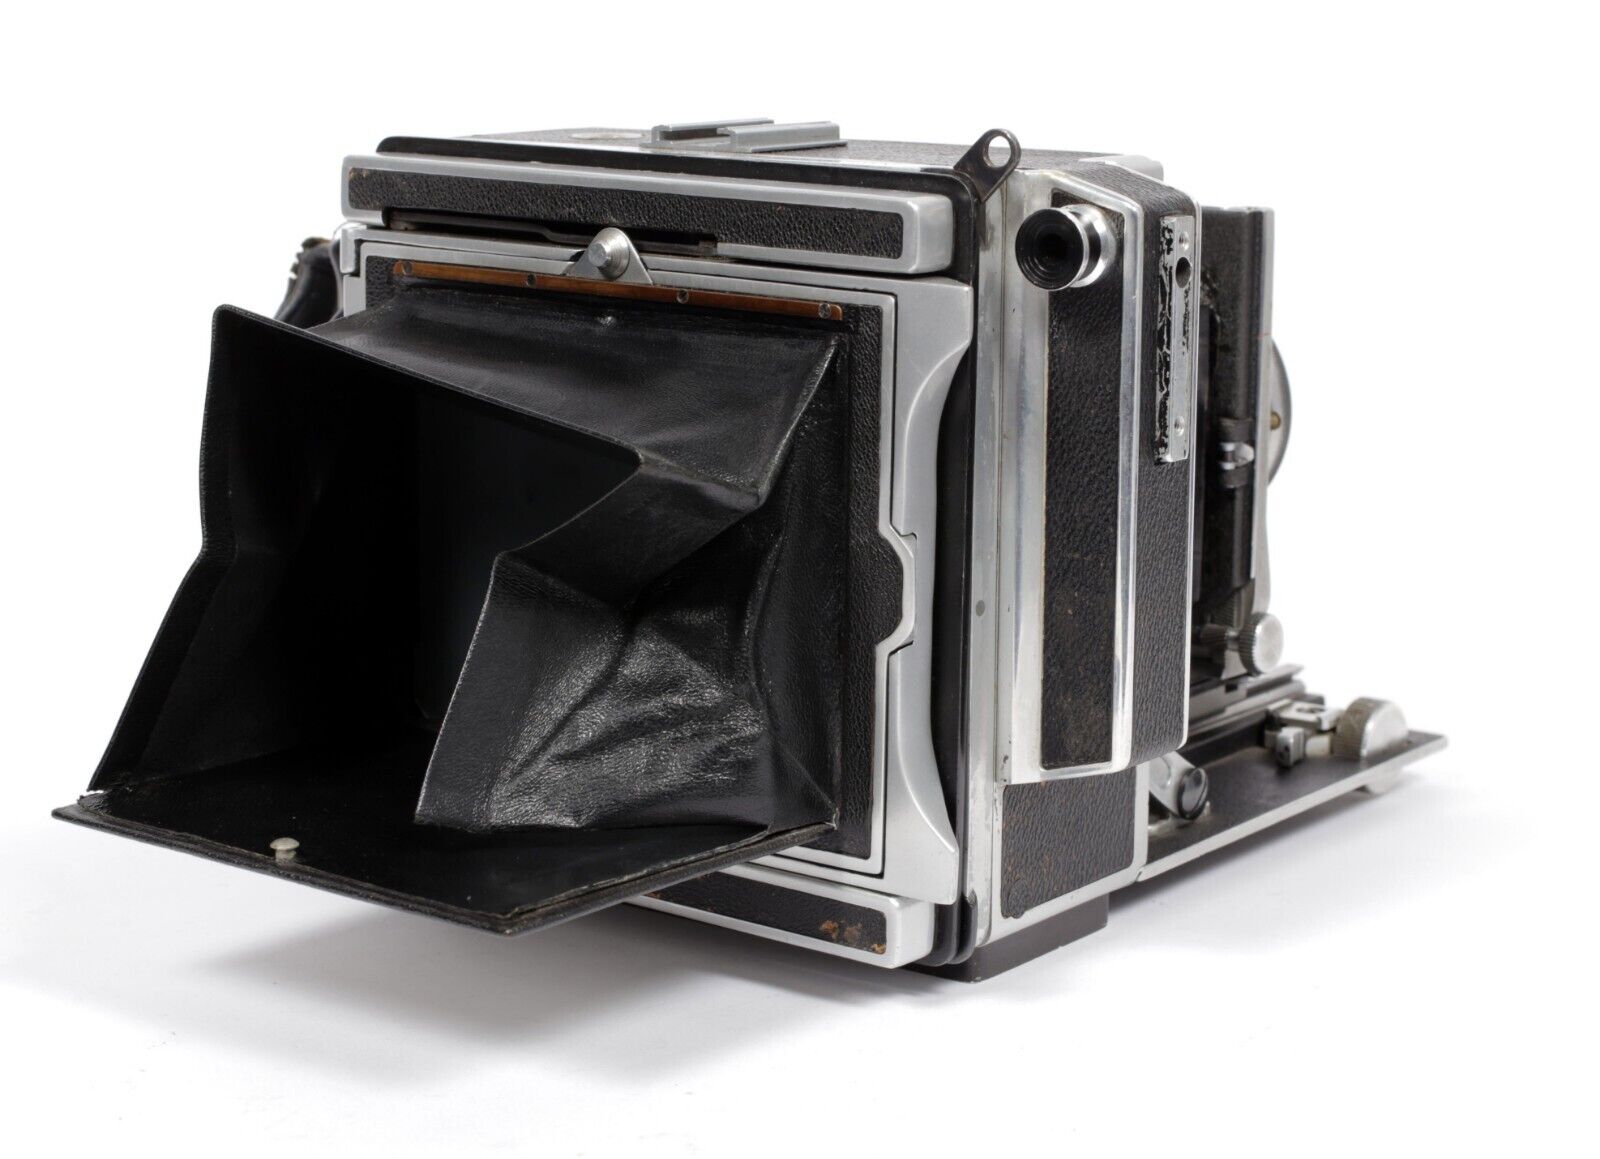 Linhof Super Technika III 4X5 camera w/ 150mm + 270mm lenses + 